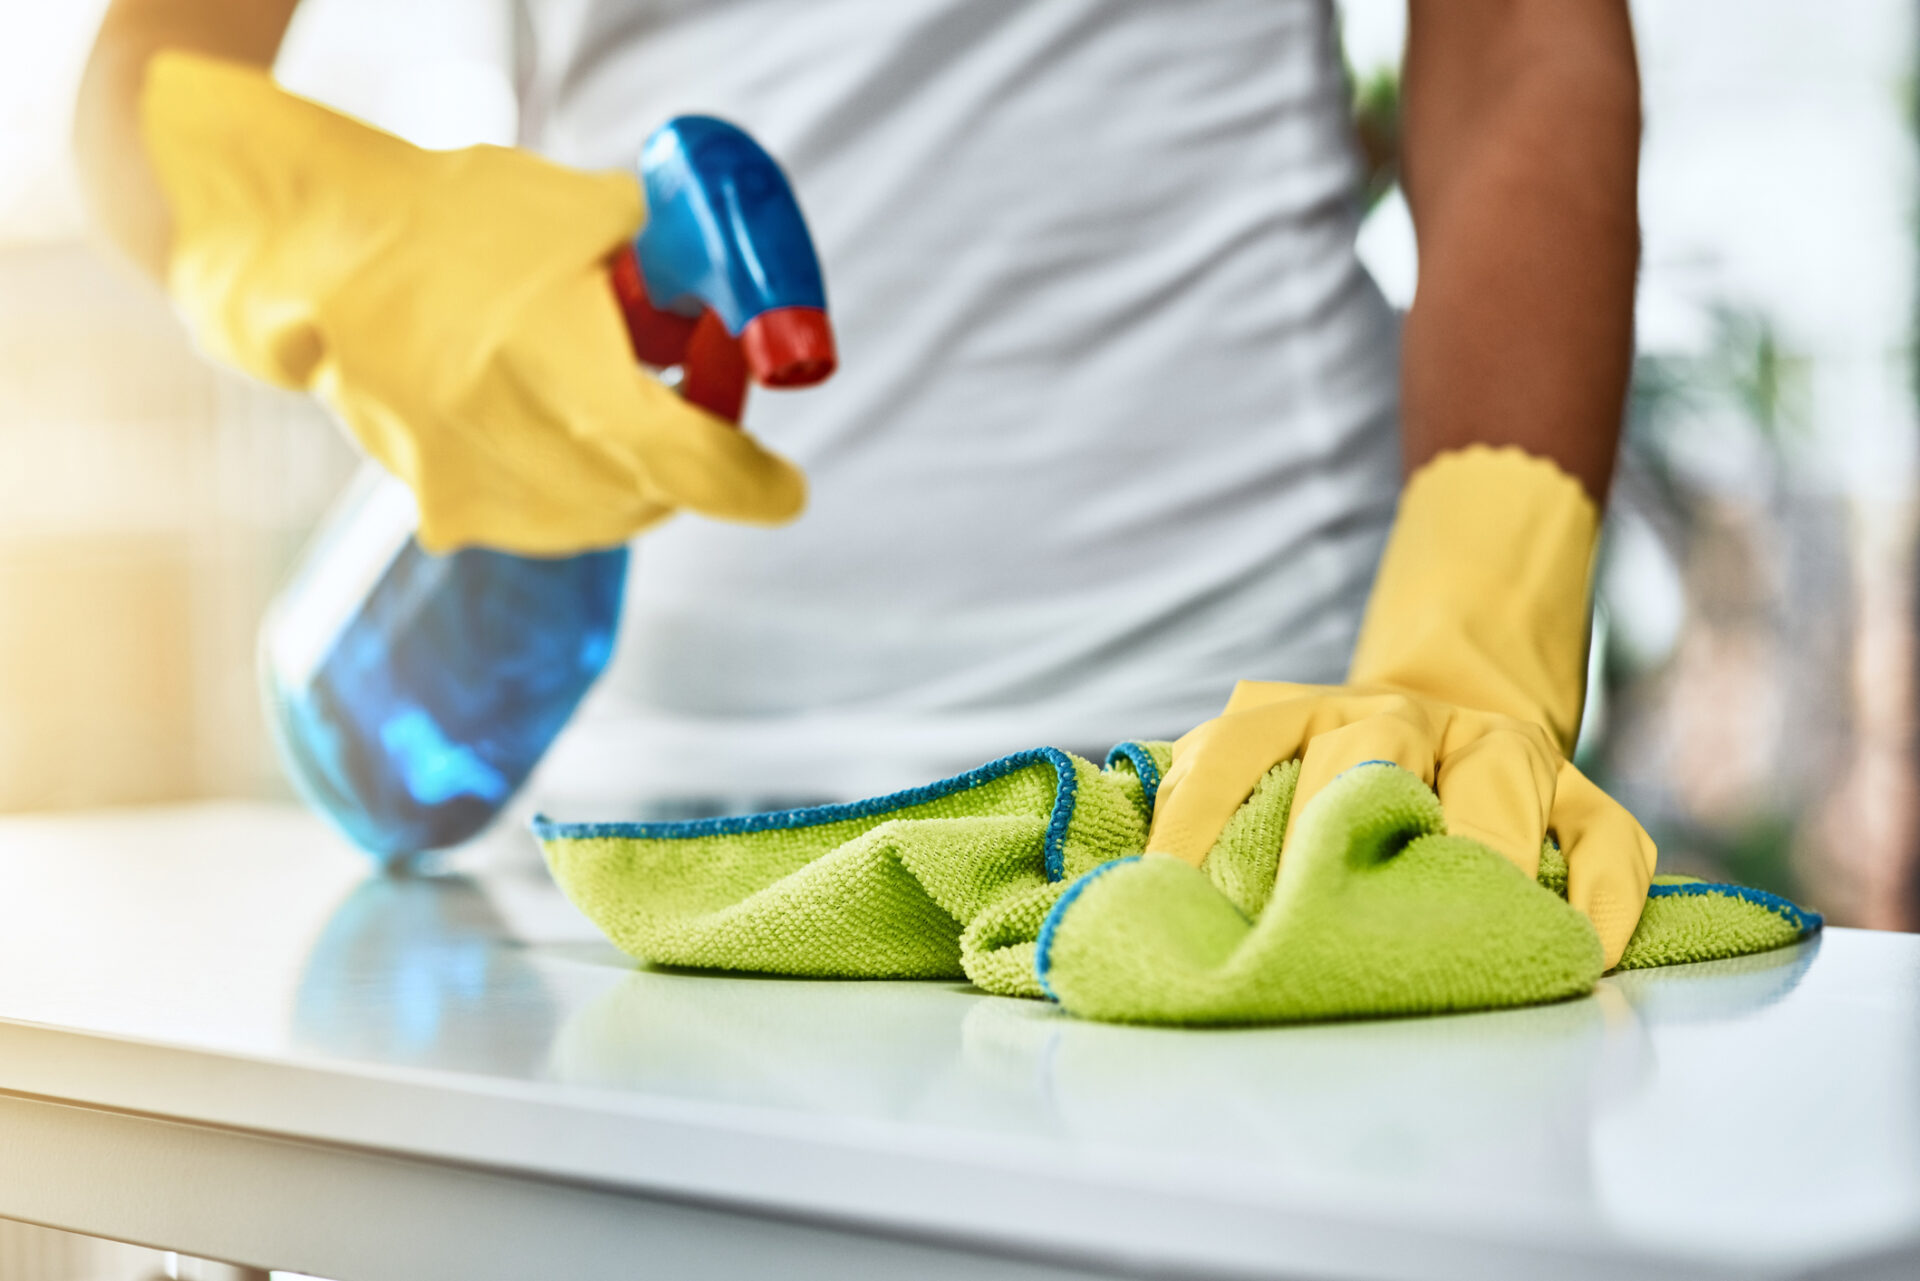 Disinfectants Market: Rising Demand for Hygiene Propels Market Growth